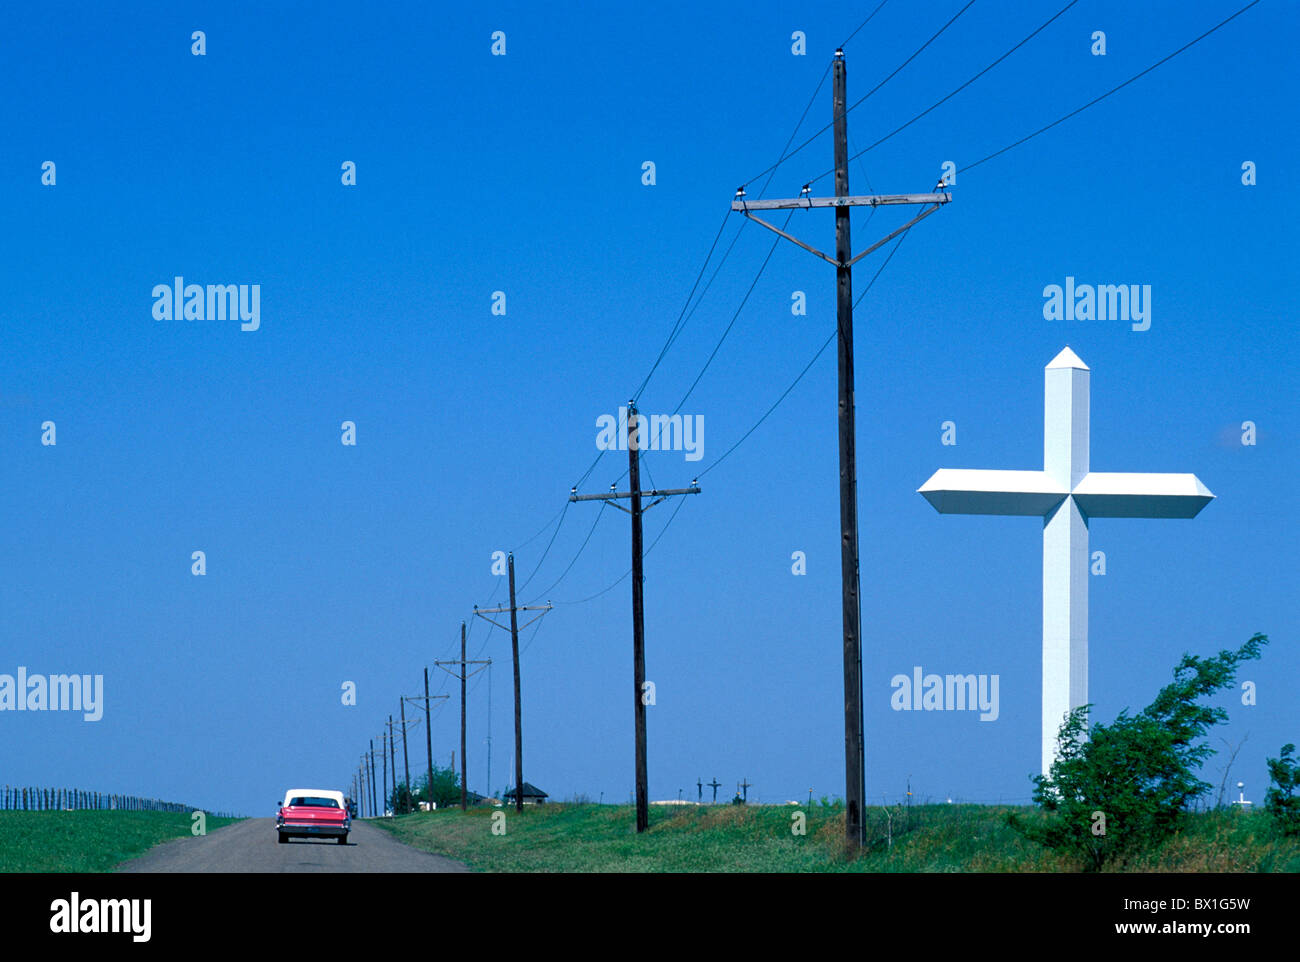 Kreuz unseres Herrn Jesus Christus Bräutigam Route 66 Texas USA Amerika Vereinigte Staaten Autos Stockfoto